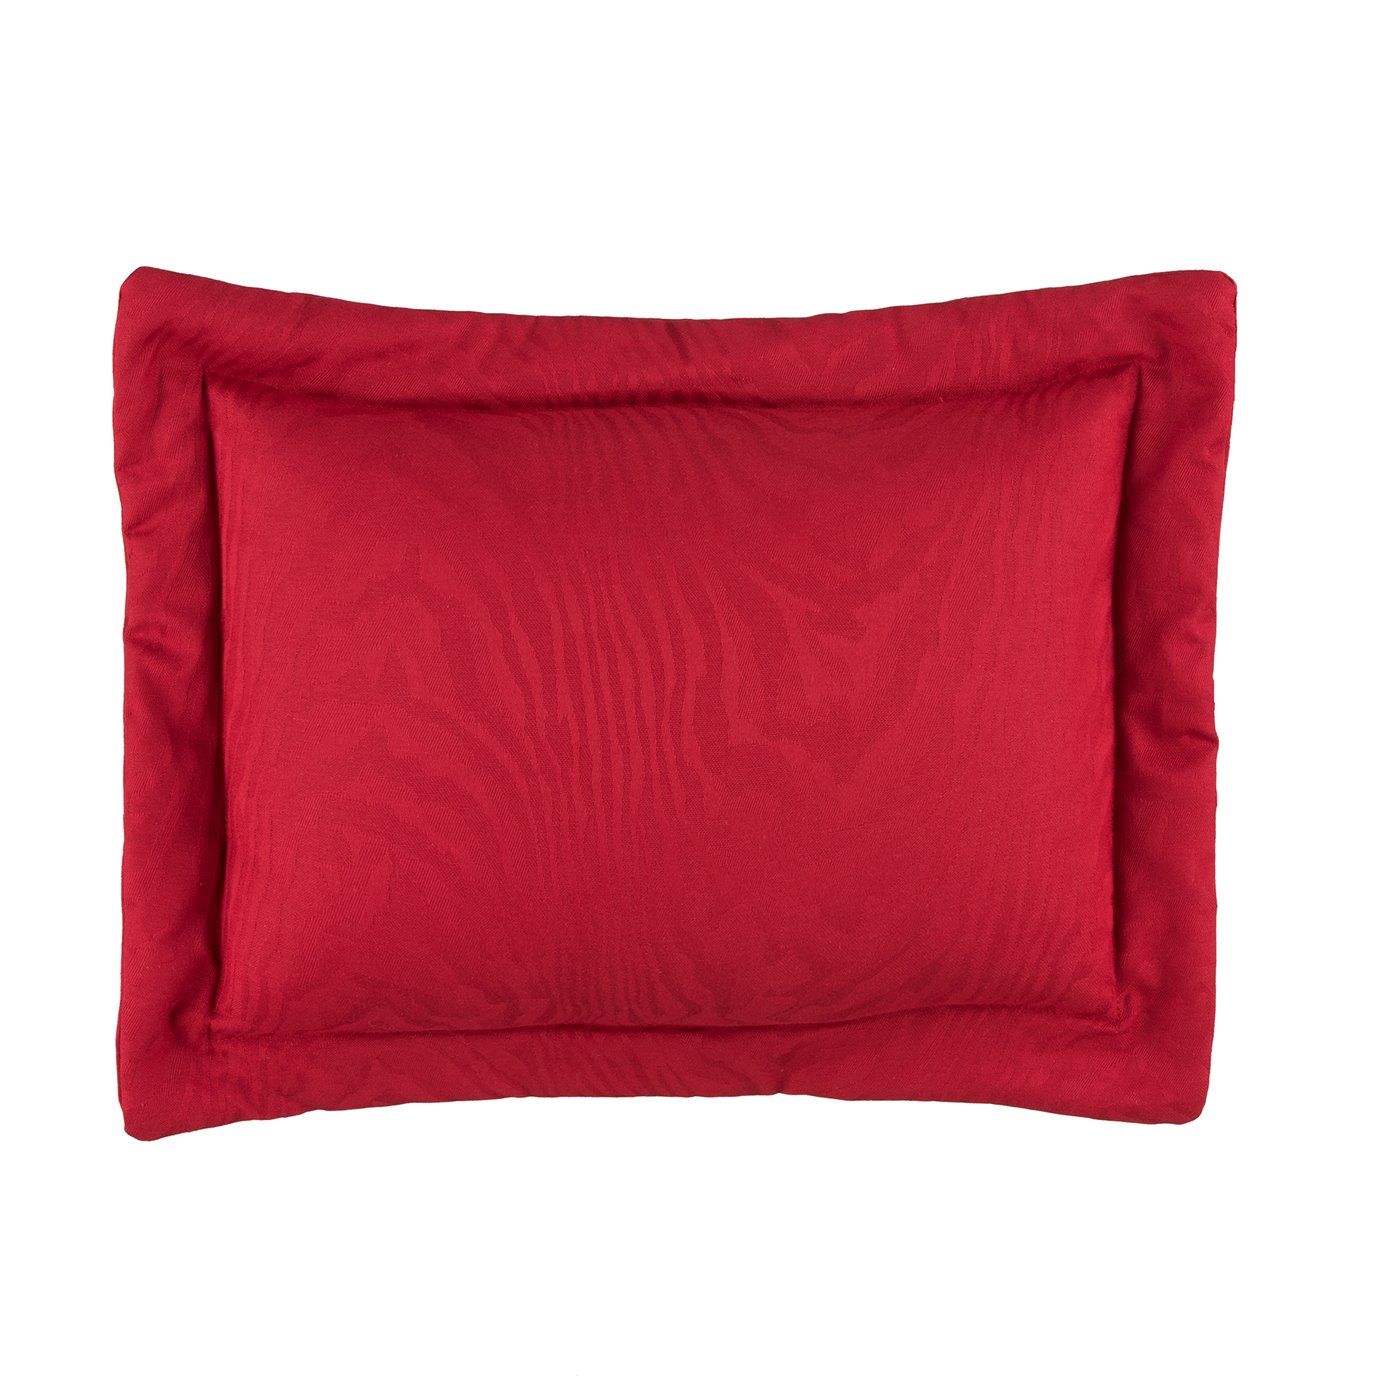 Bouvier Black Breakfast Pillow - Red Jacquard